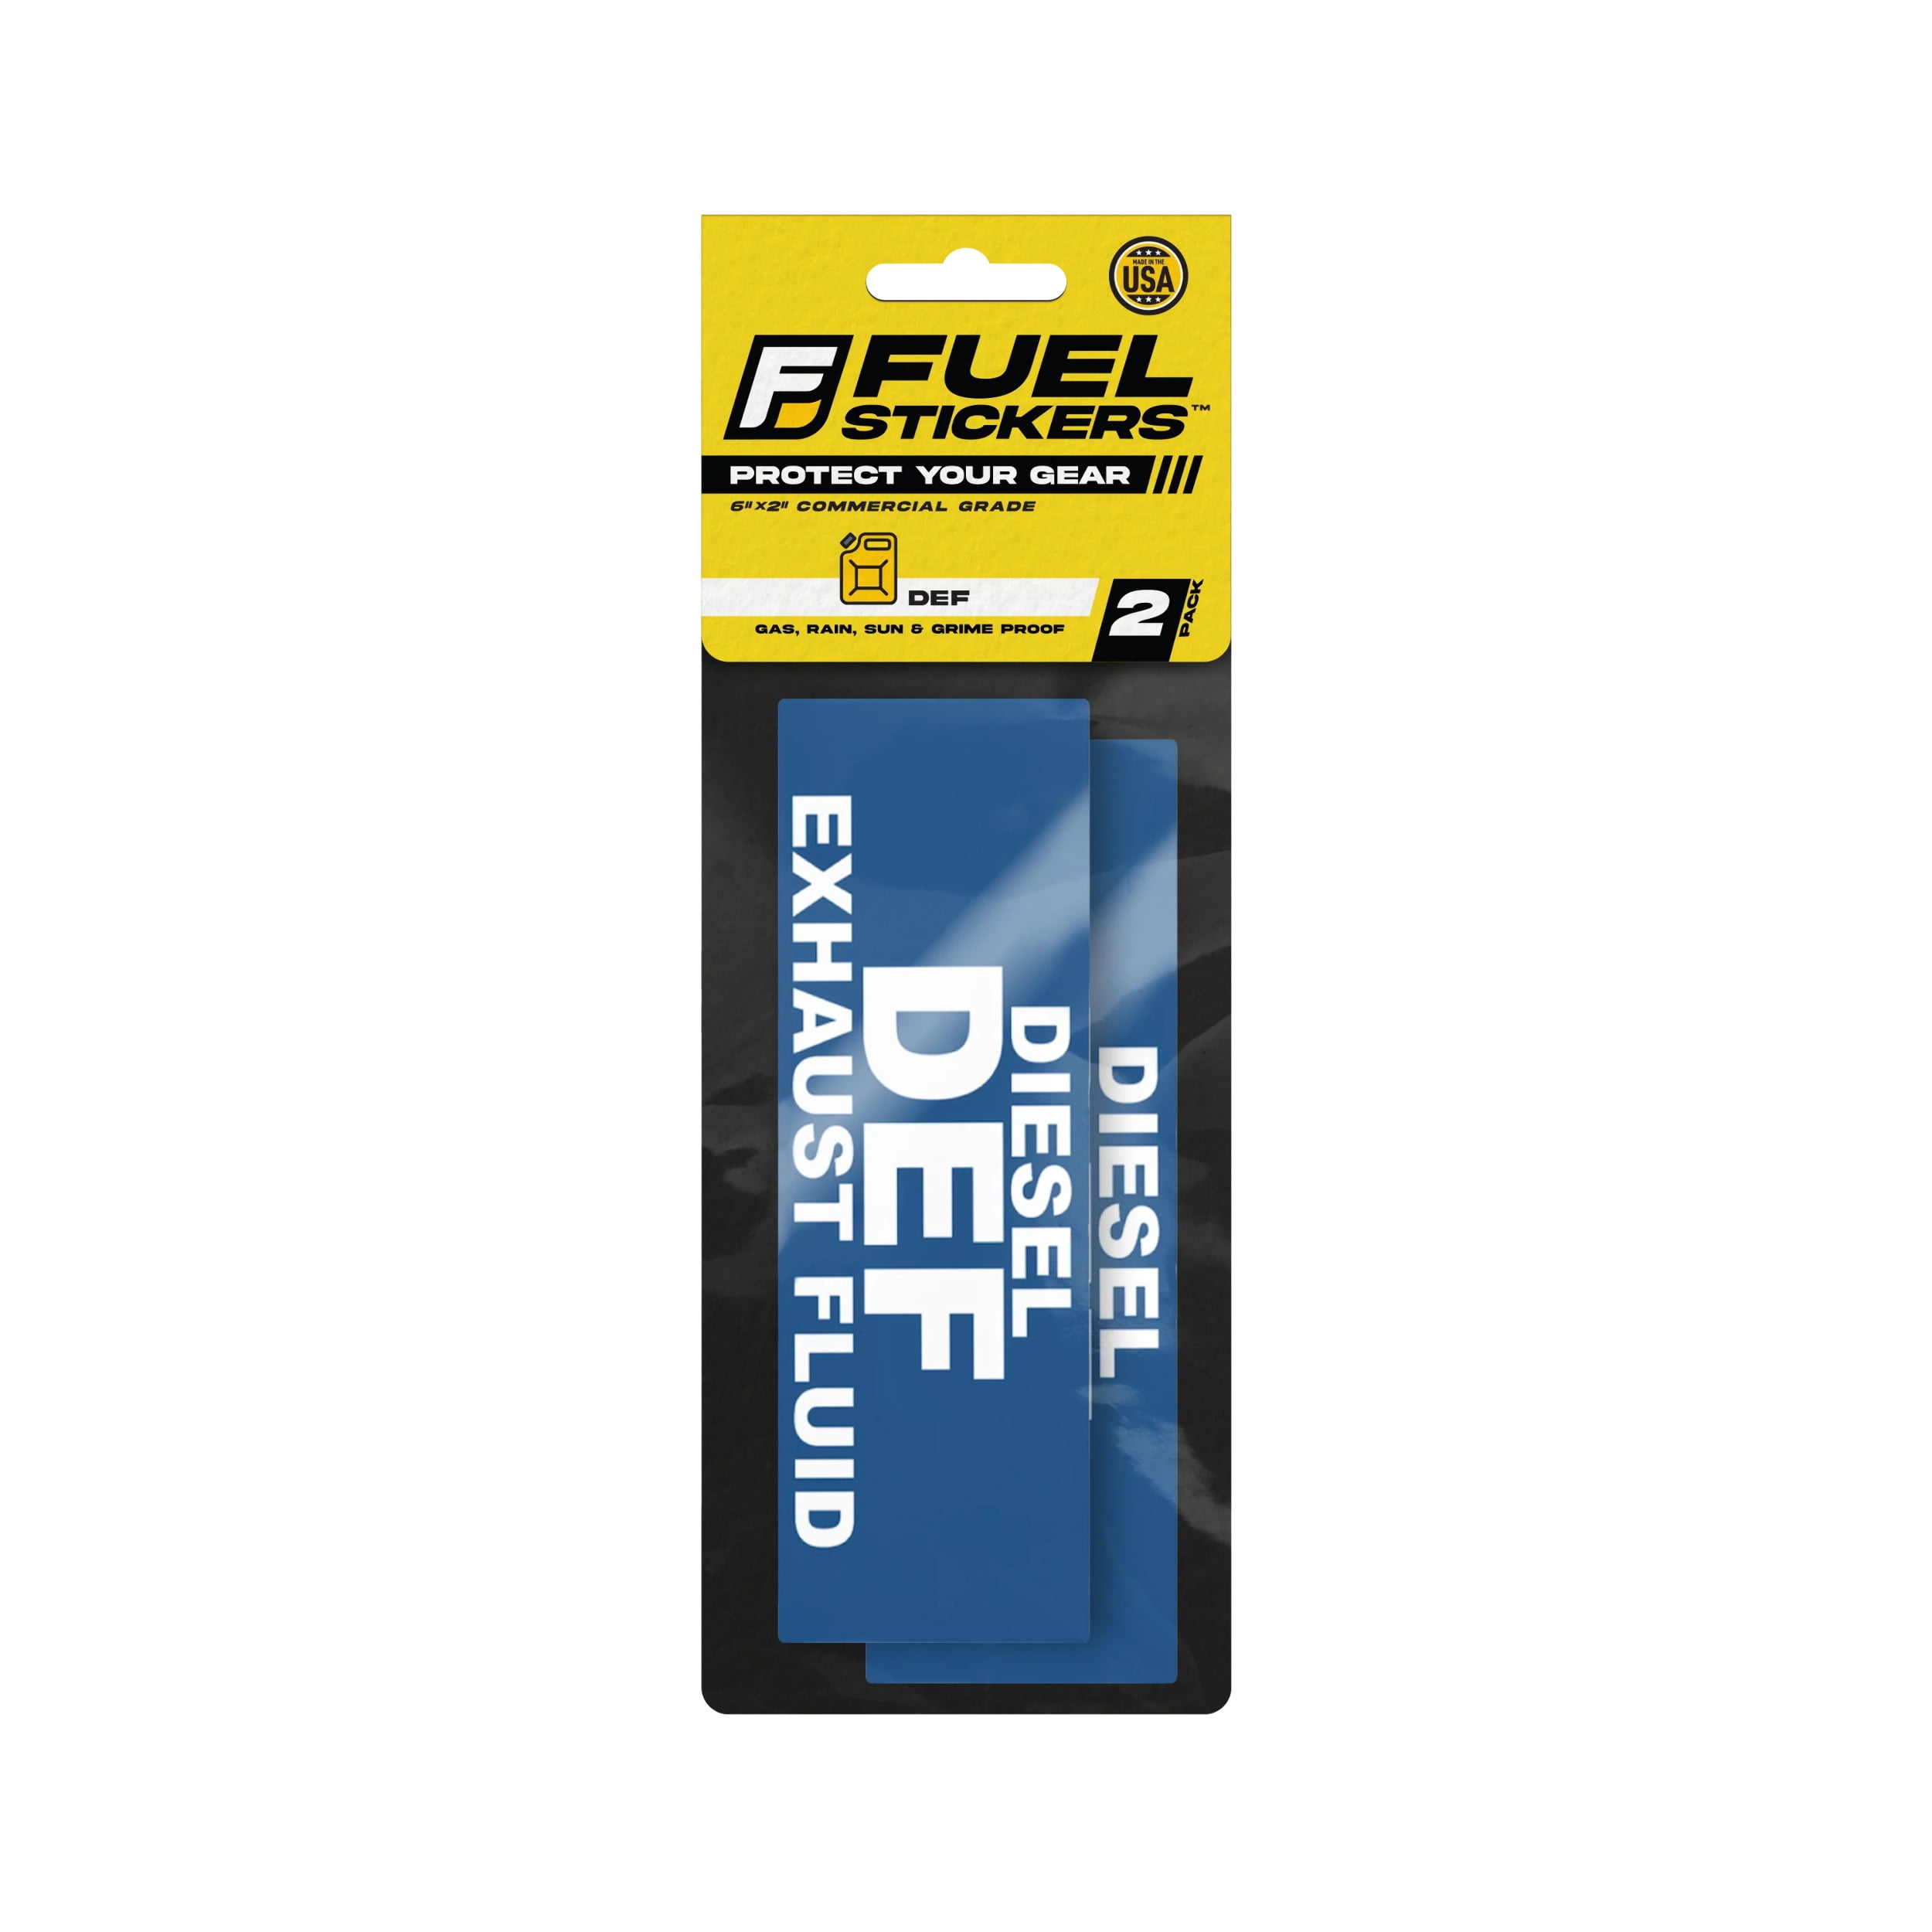 DEF Only Sticker - Diesel Exhaust Fluid Label by Fuel Stickers | 6x2 ...